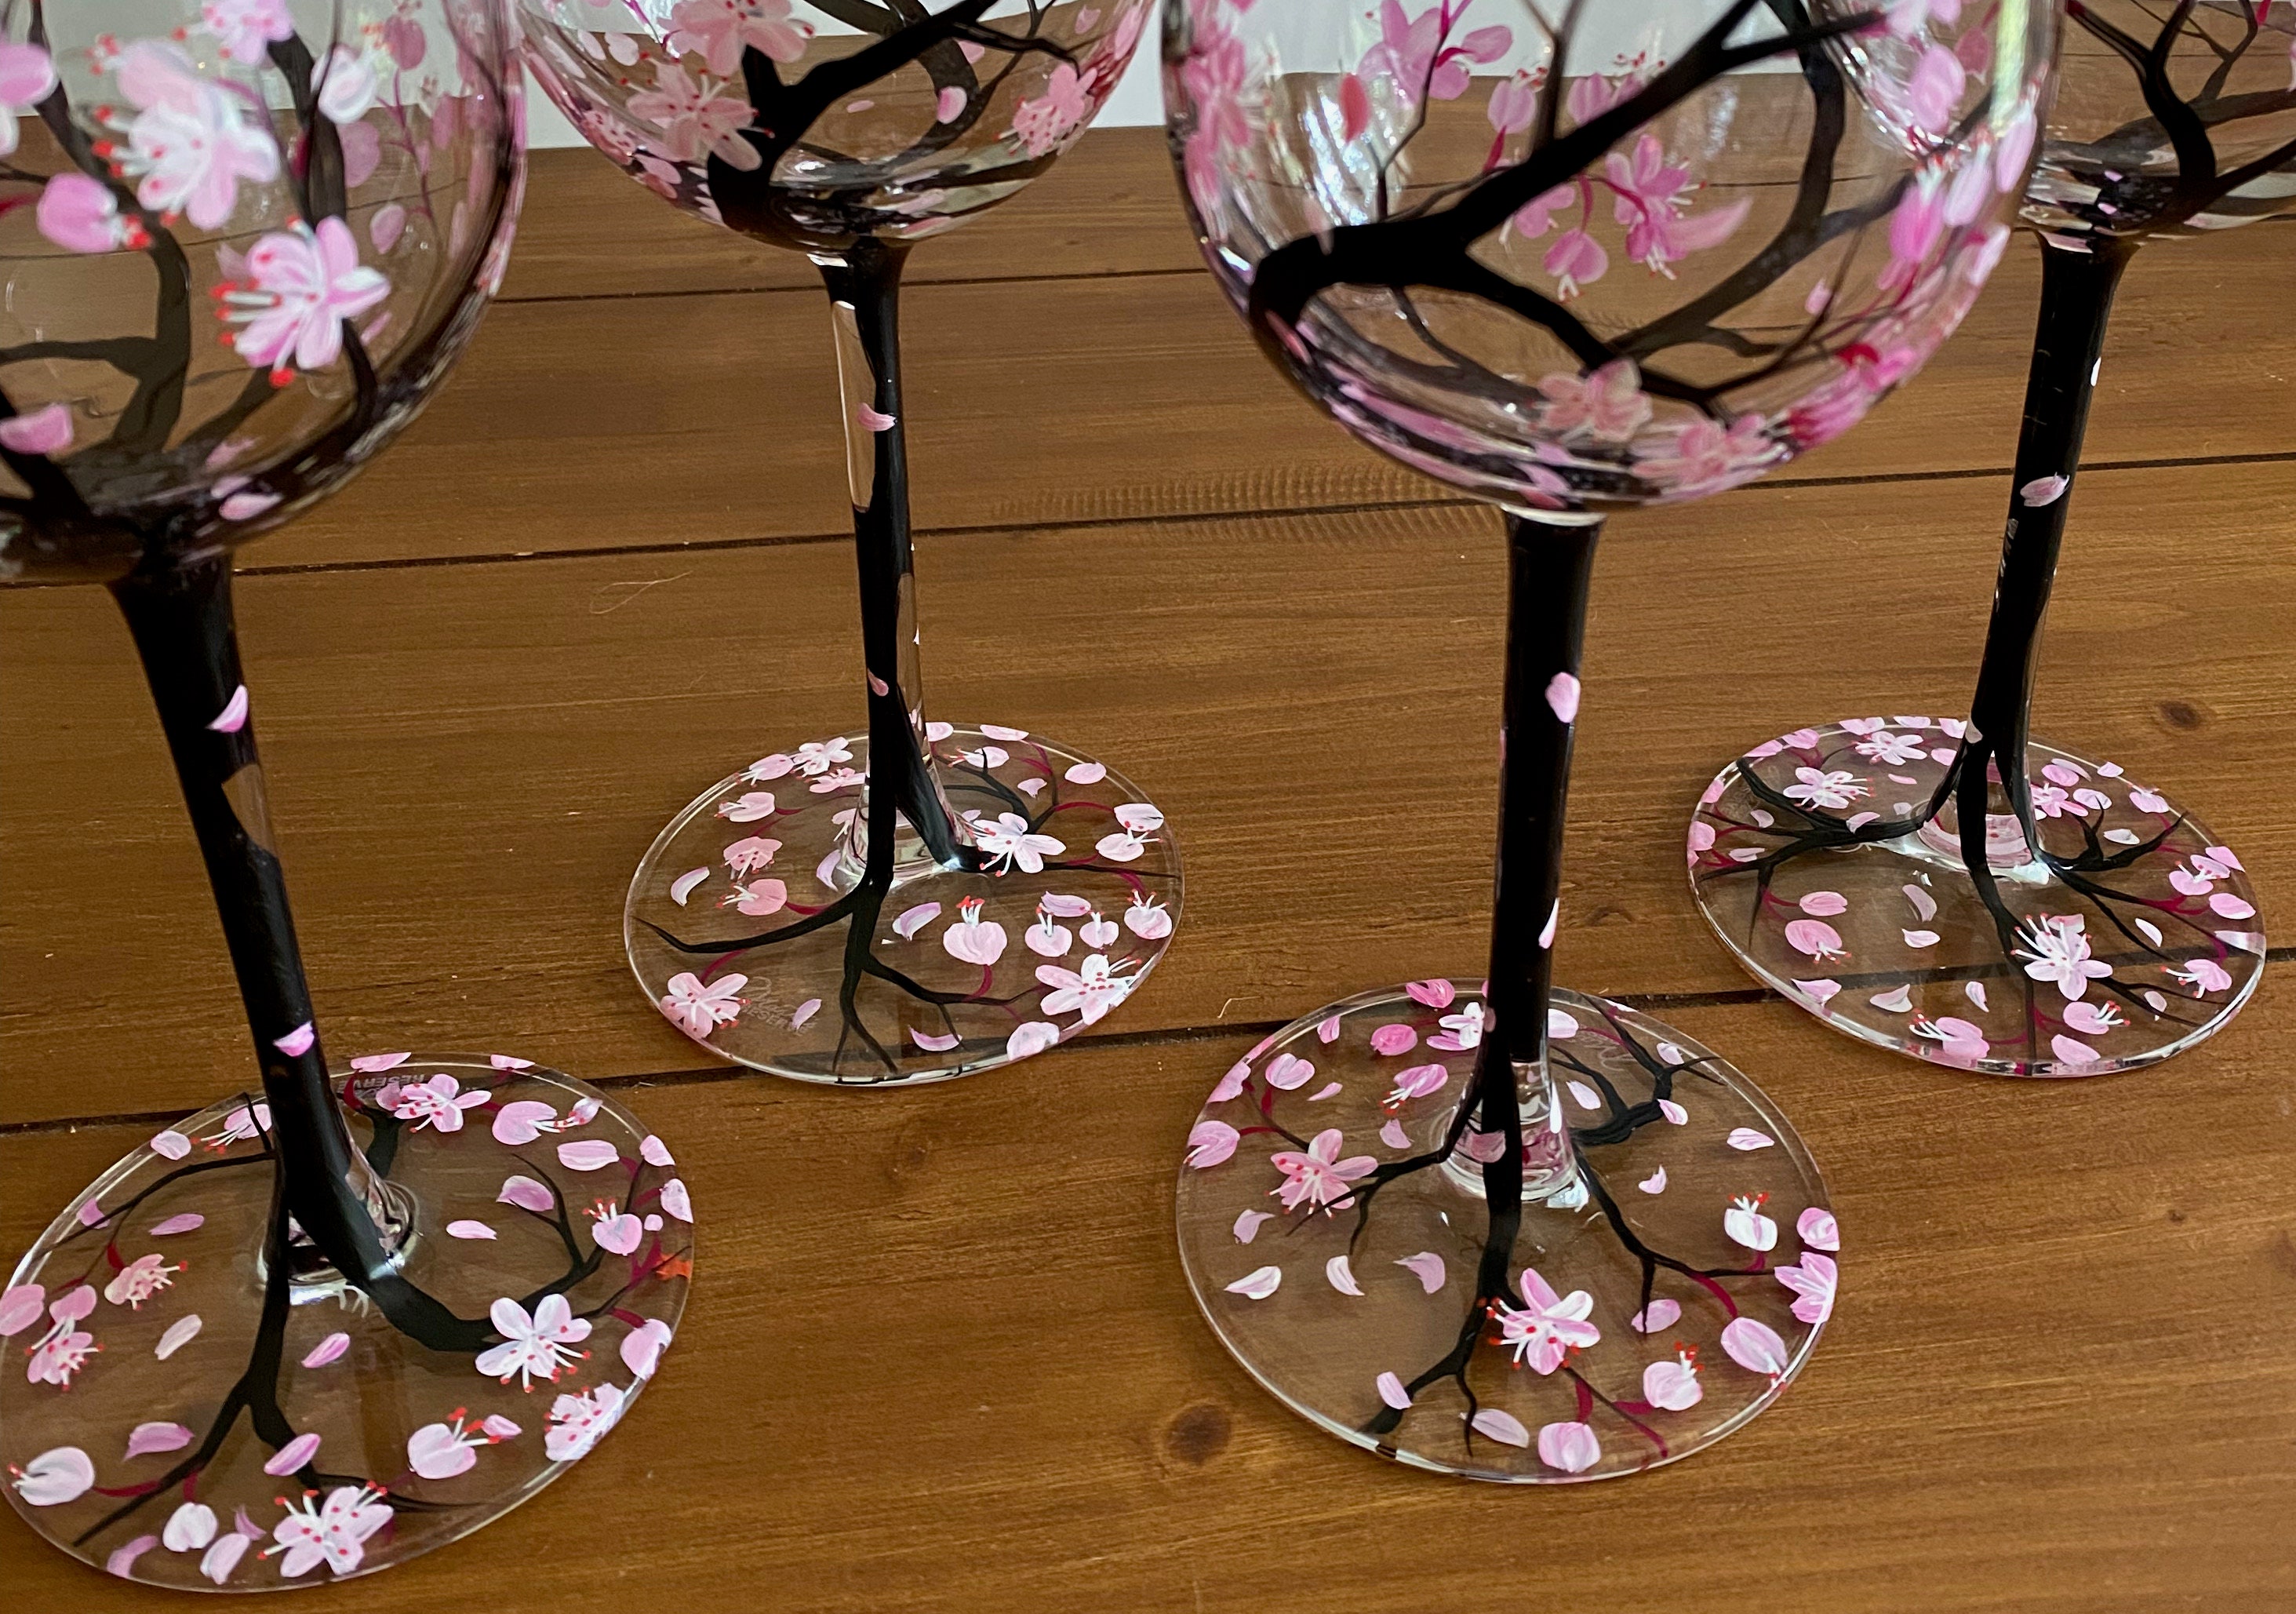 Hand Painted Cherry Blossom Wine Glass